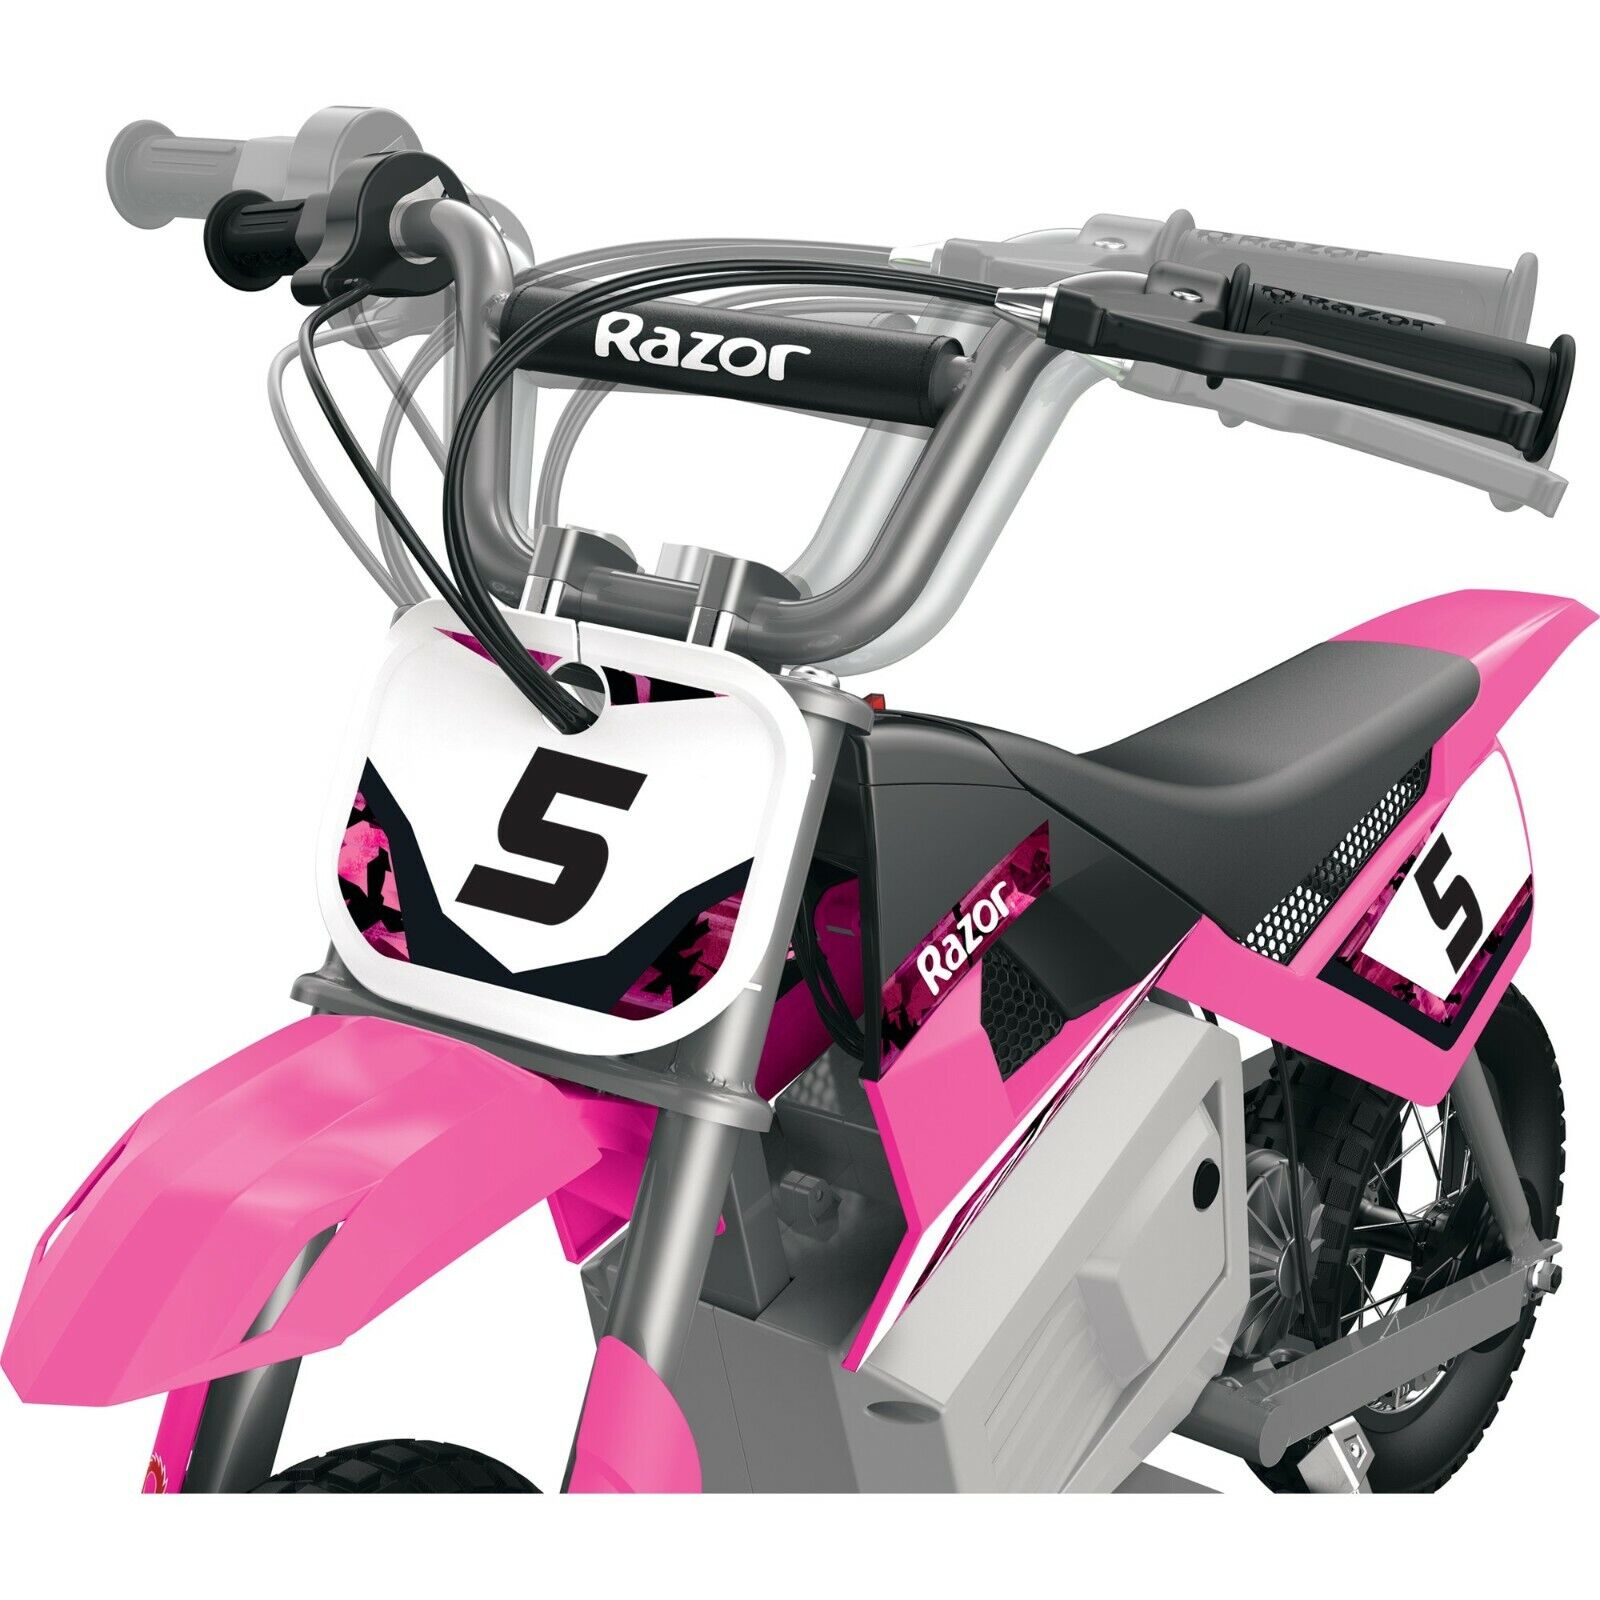 Razor Dirt Rocket MX350 Electric Motocross Dirt Bike, Ages 13+ —